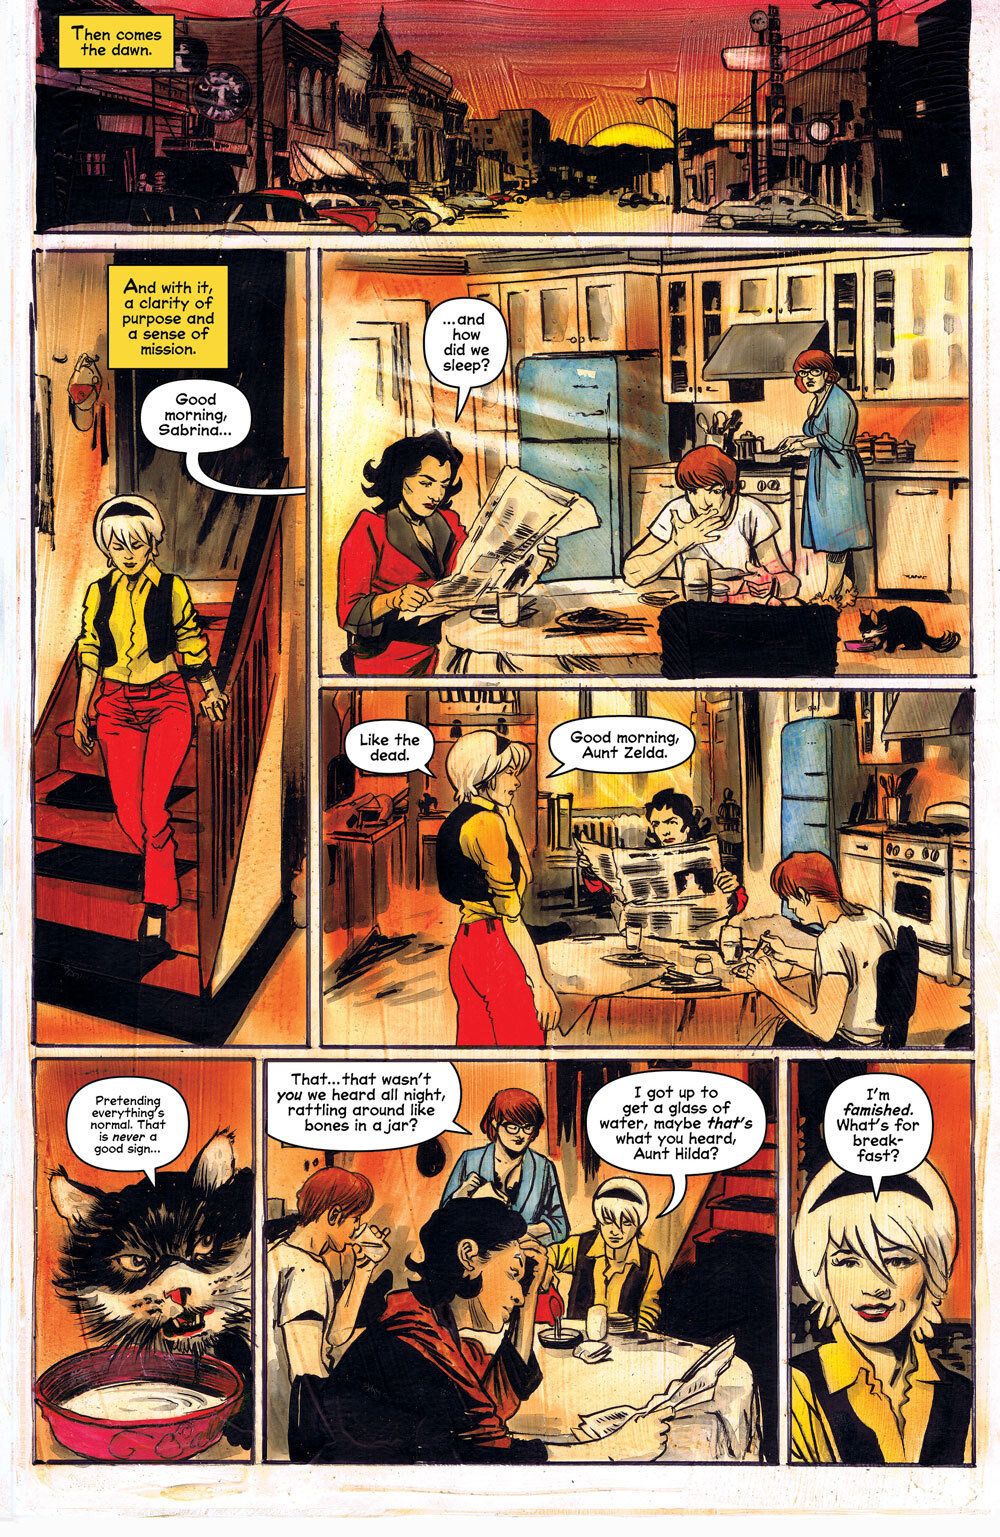 Interview Chilling Adventures of Sabrina Creator Talks Return To Original Comic